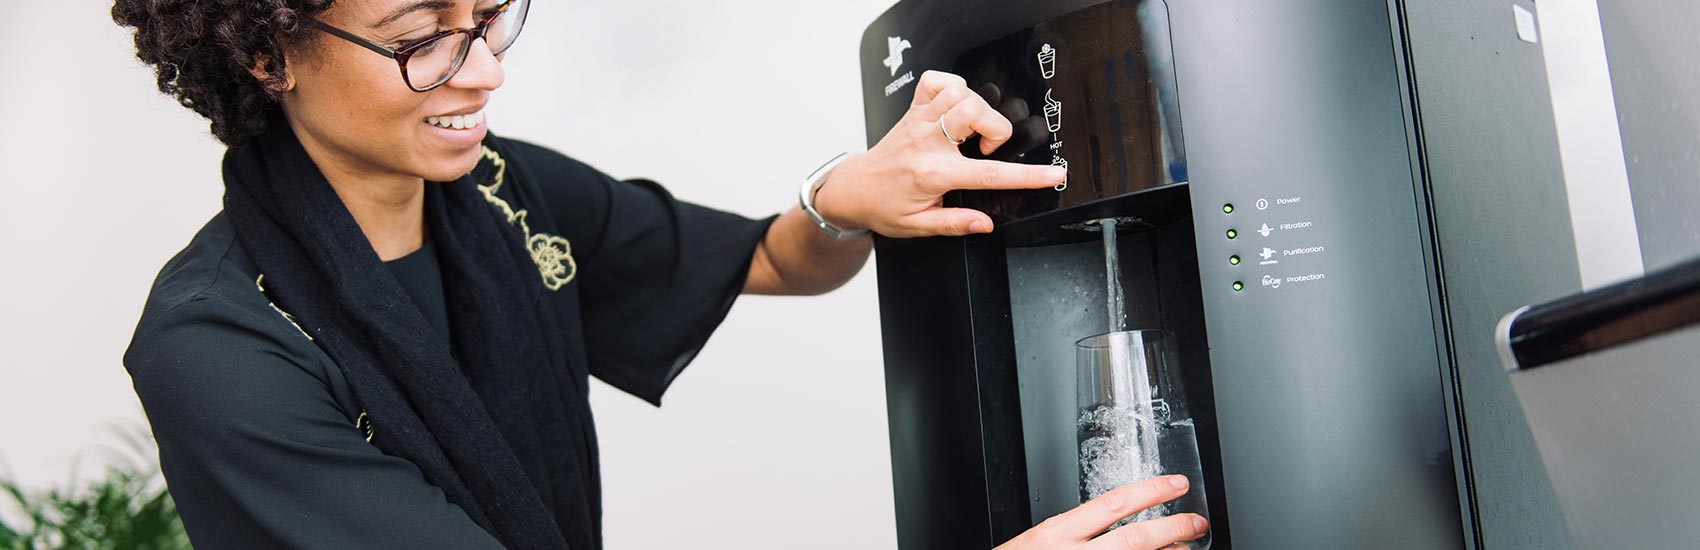 Woman using WL3 water dispenser